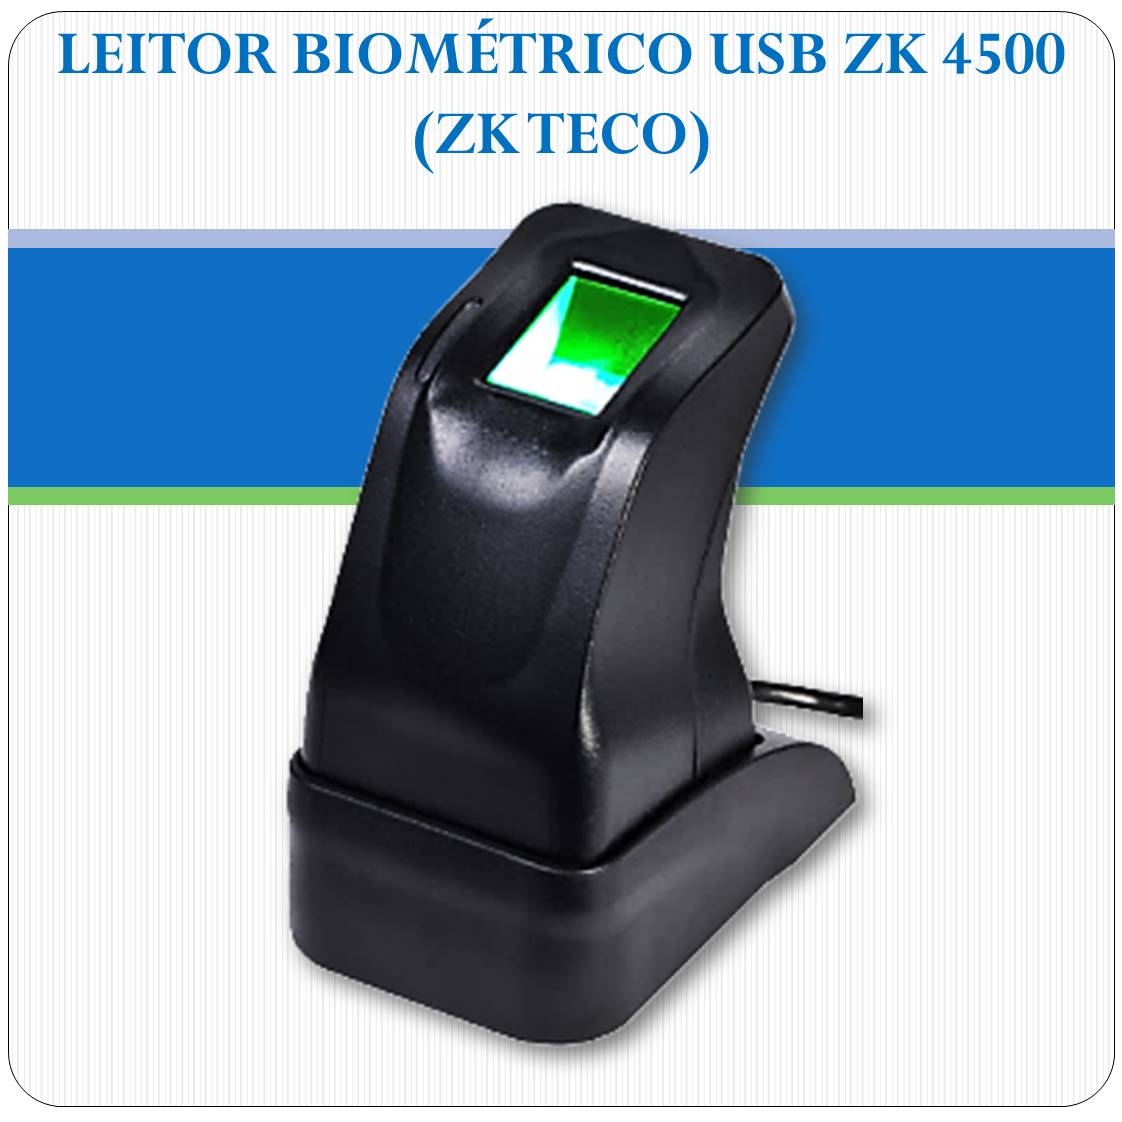 Leitor Biométrico USB - U4500 32-64bits